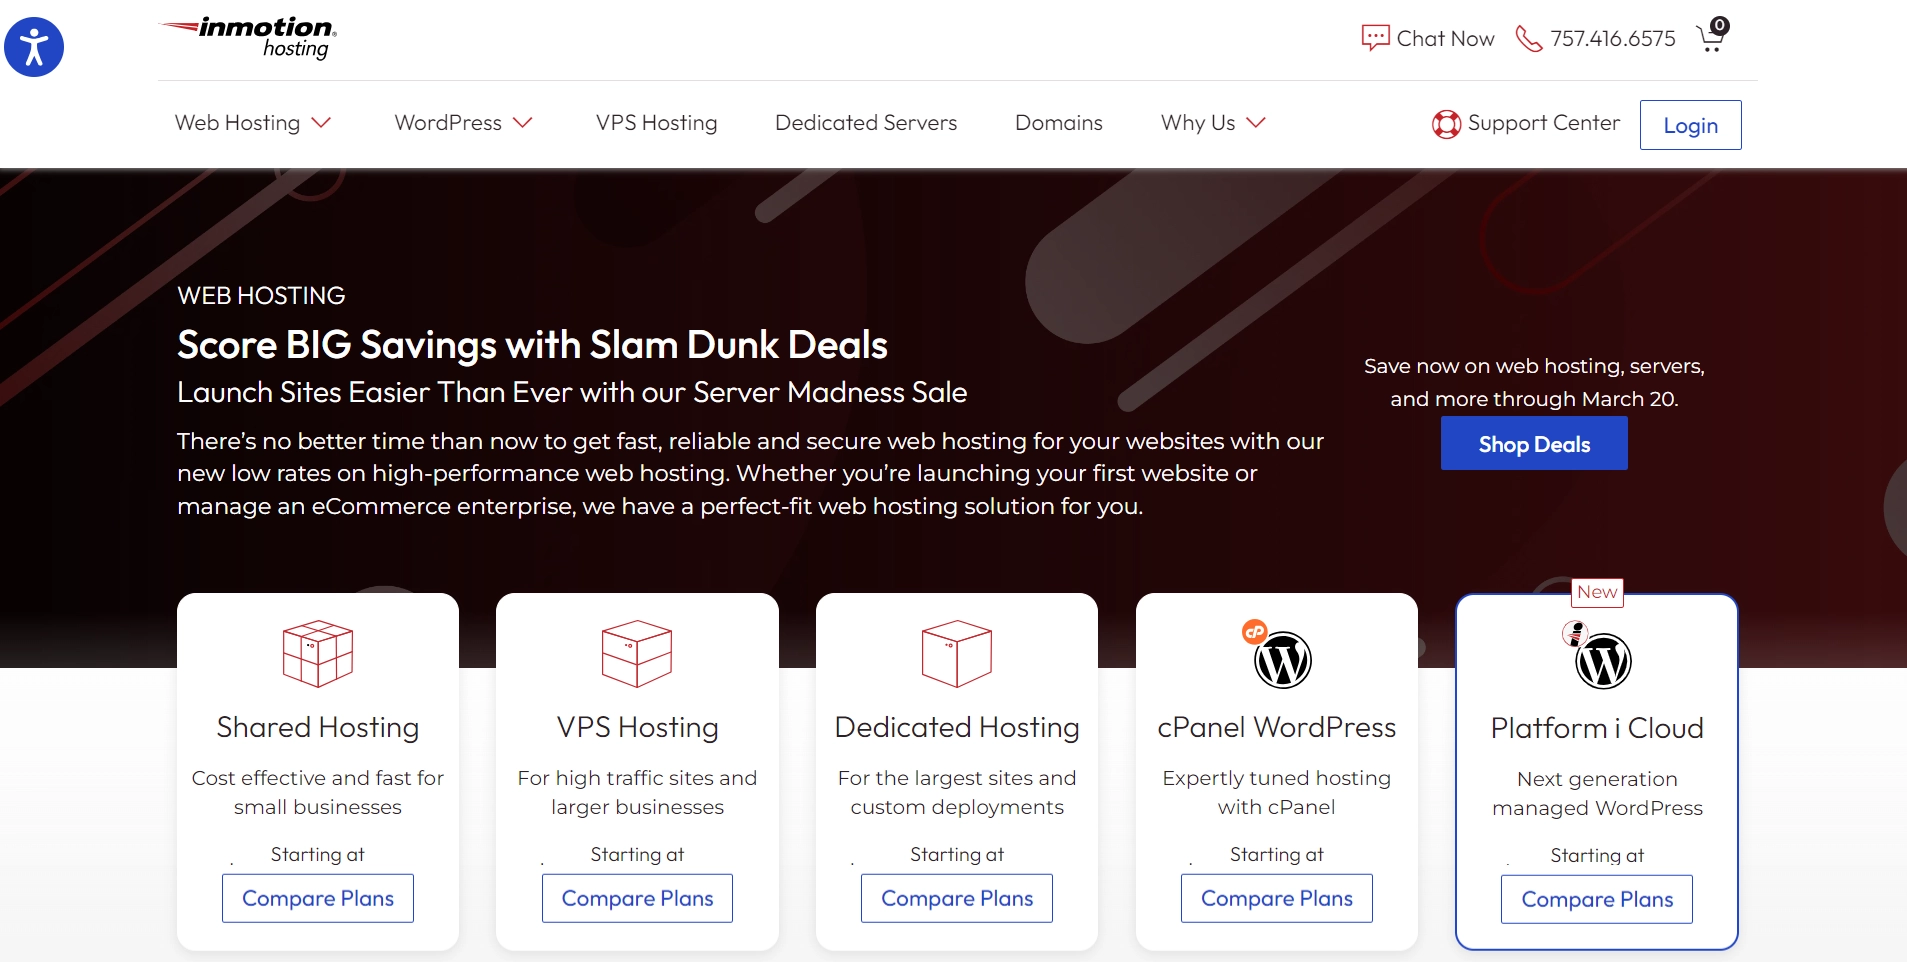 InMotion WooCommerce hosting providers